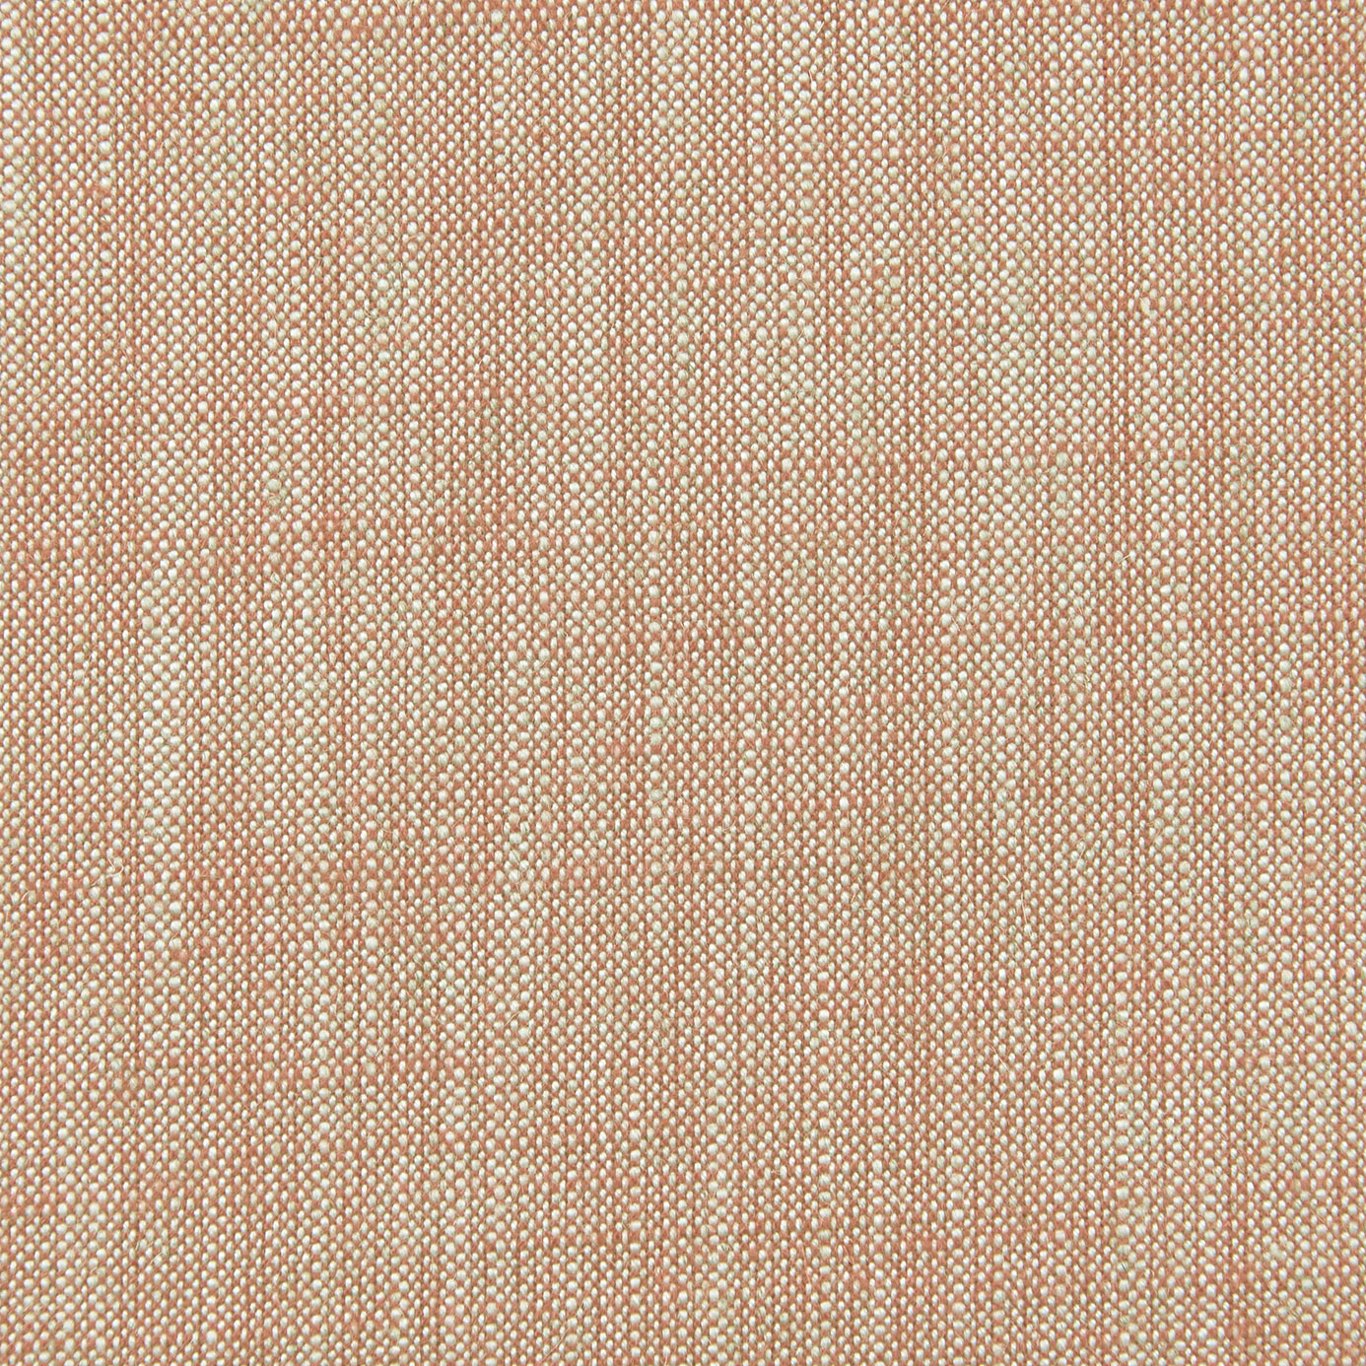 Biarritz Fabric by Clarke & Clarke - F0965/13 - Coral